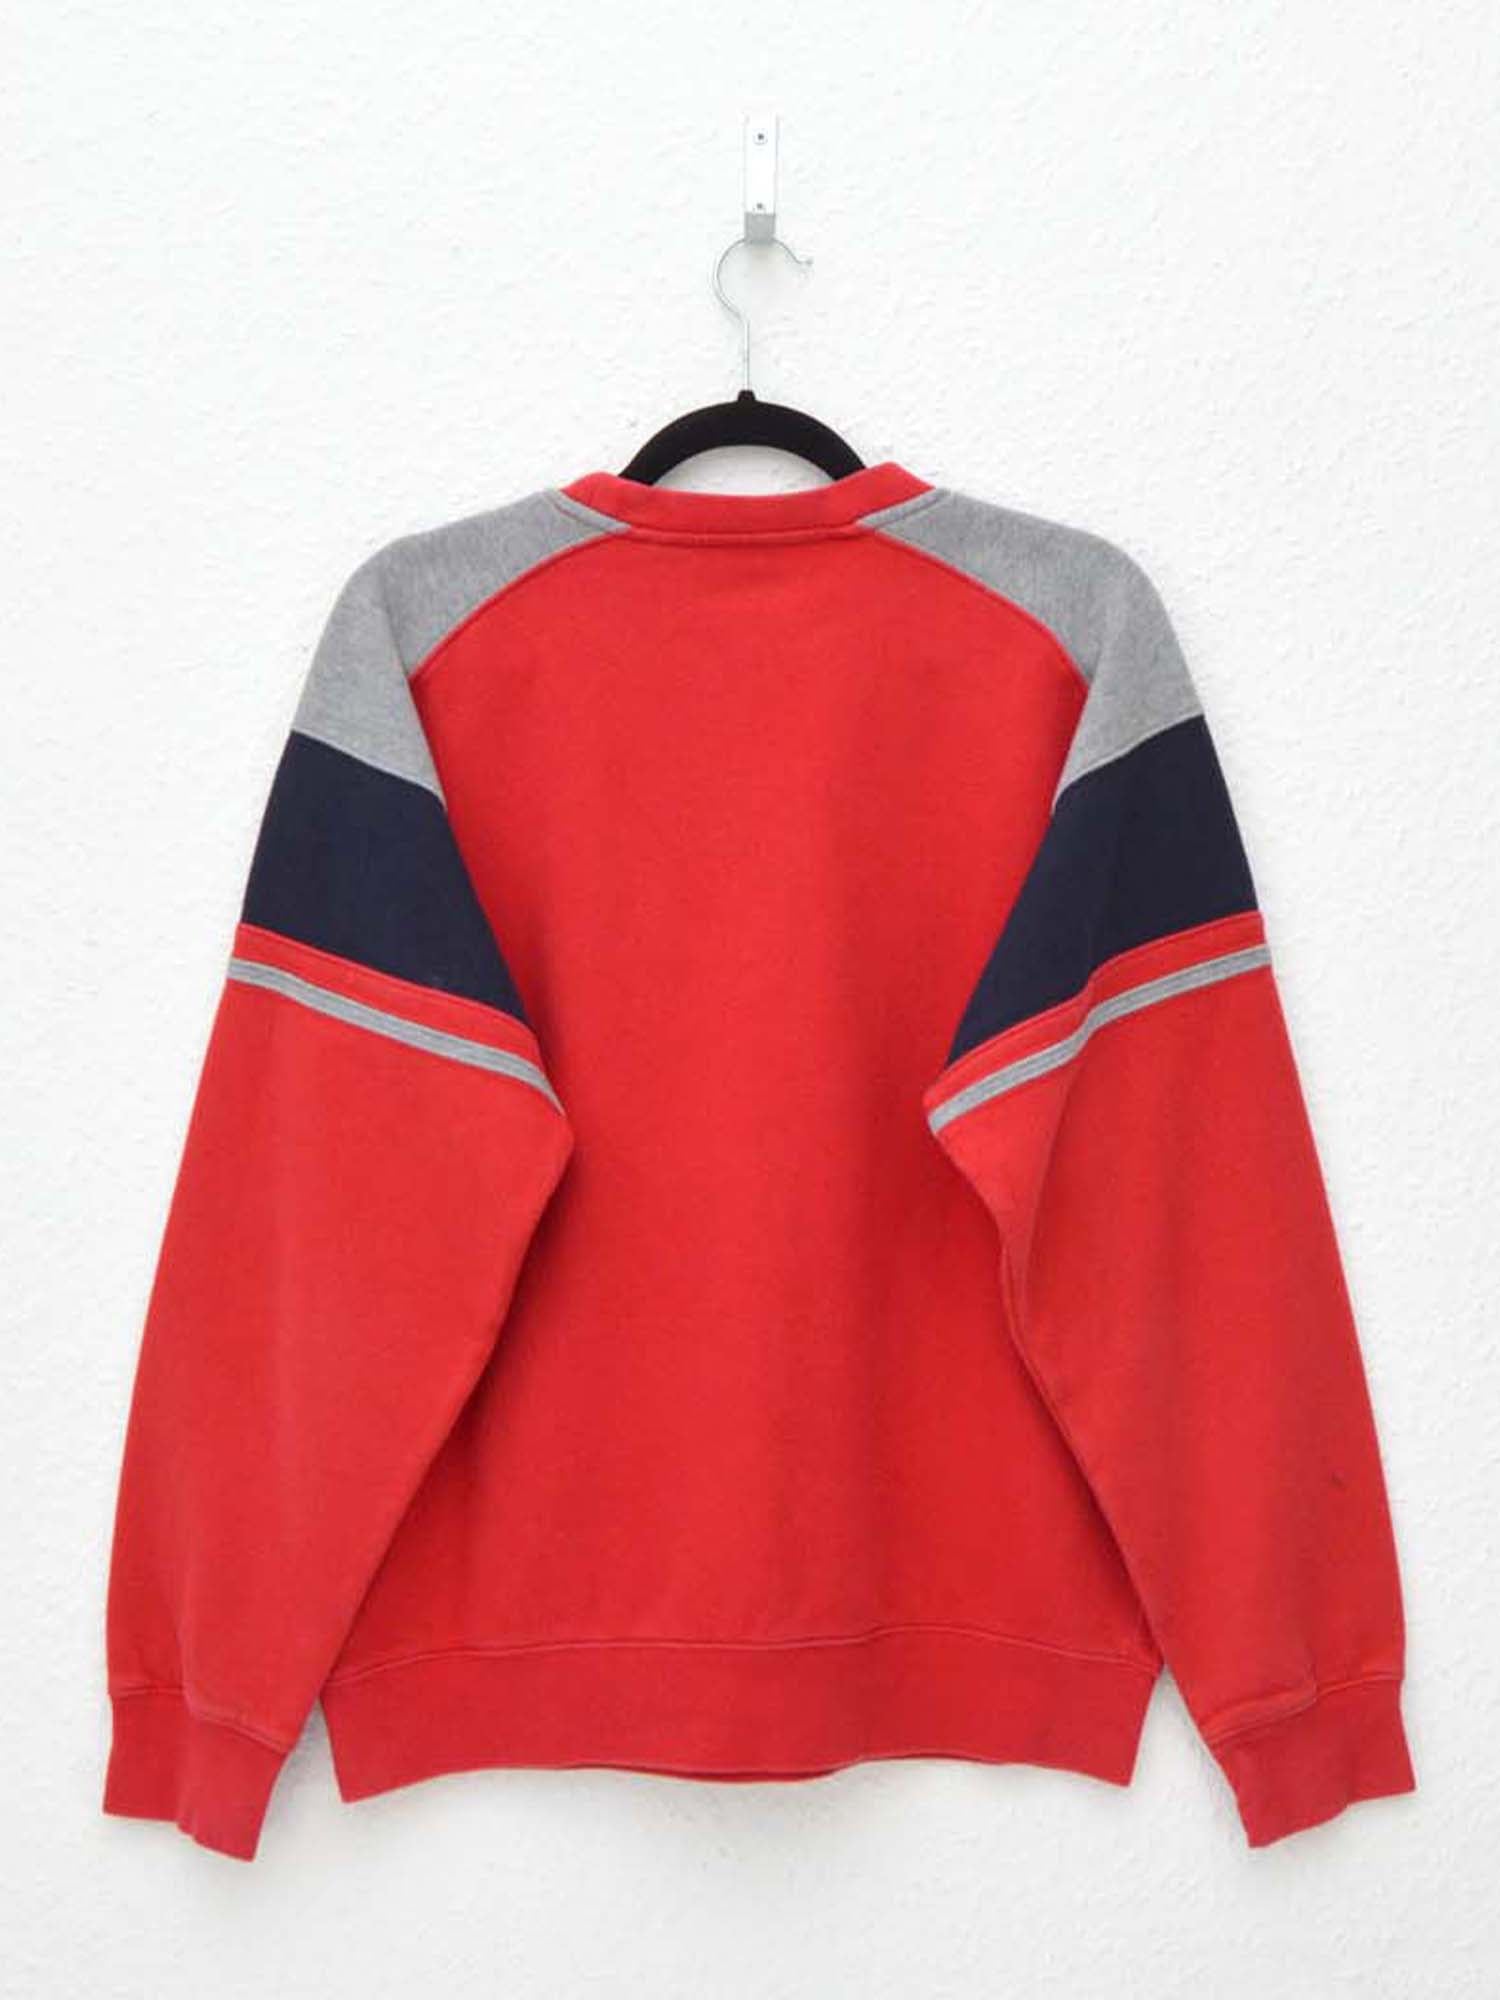 Vintage Sweatshirts | Shop - Baggy Boys Ltd.